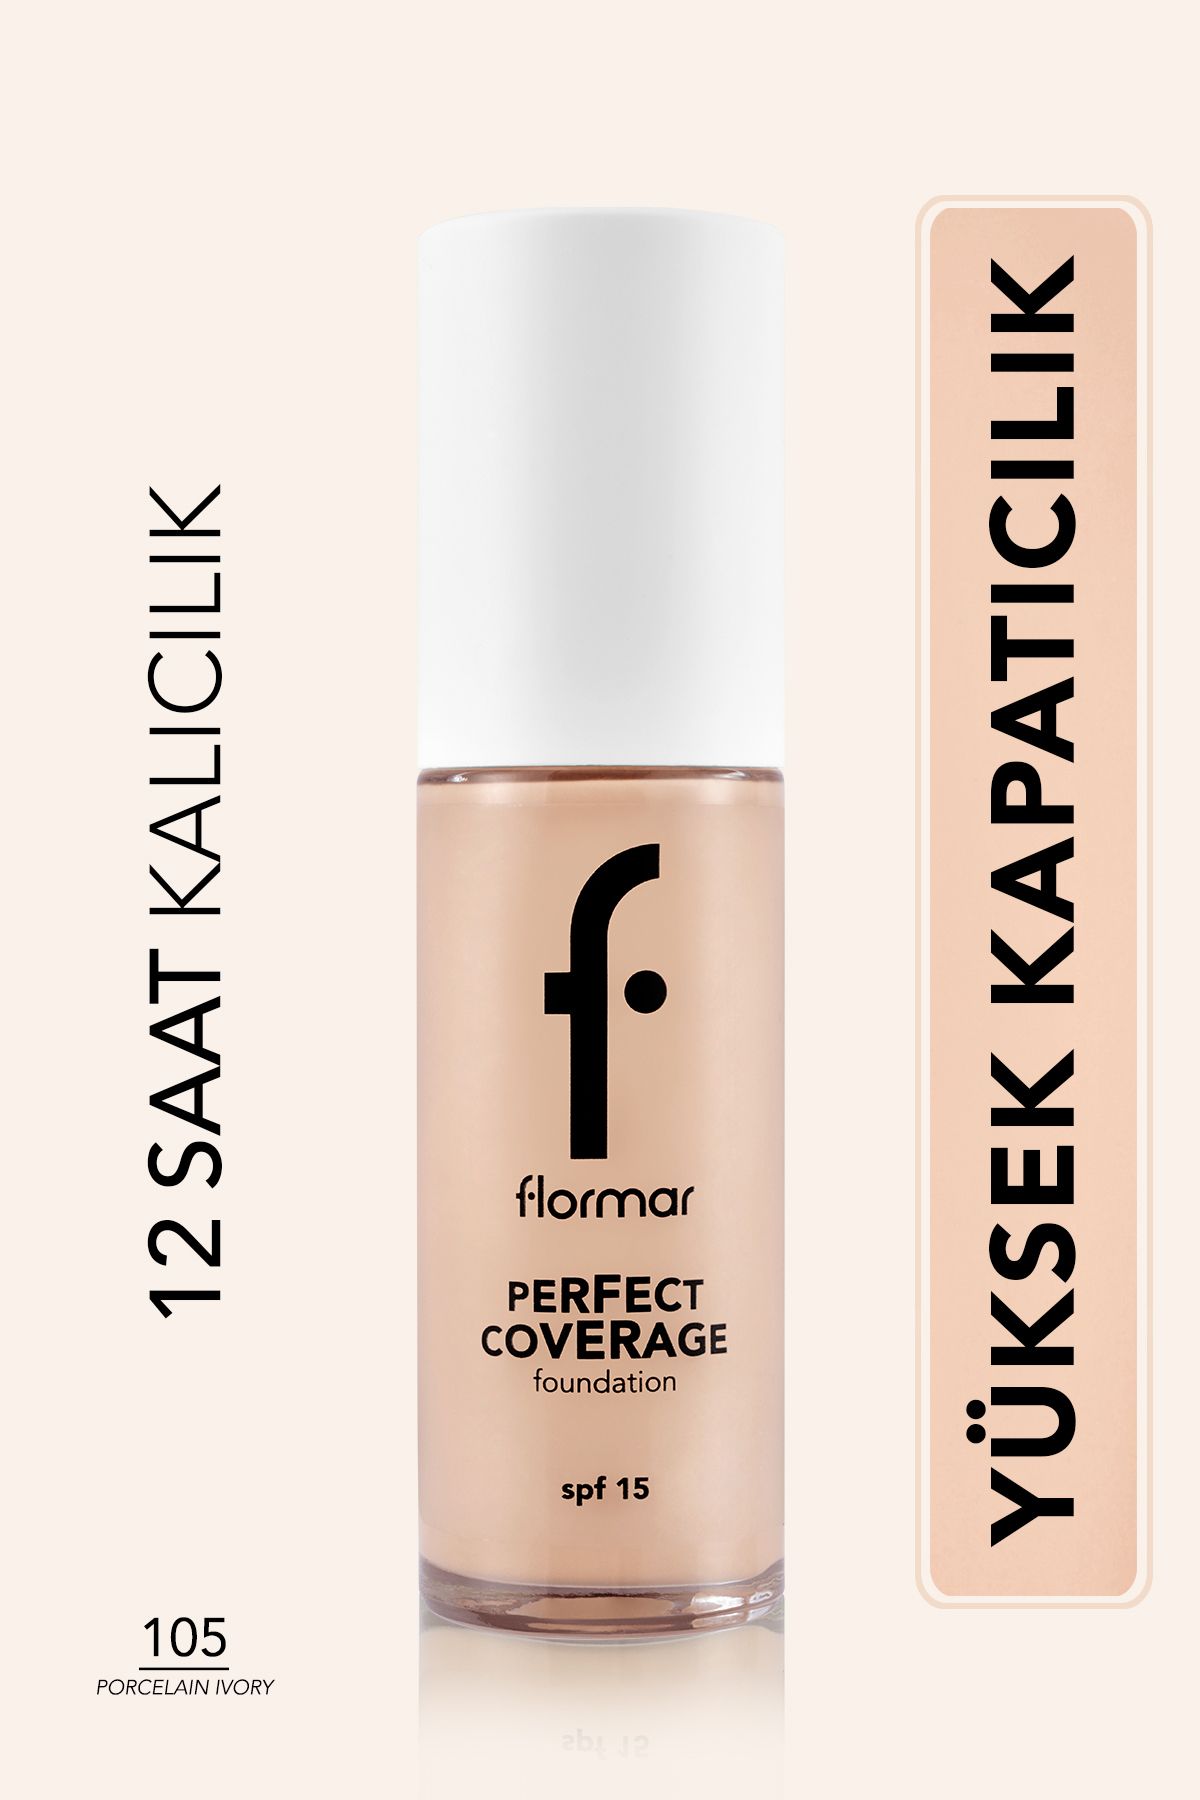 Flormar Make-Up: Flormar Perfect Coverage Foundation